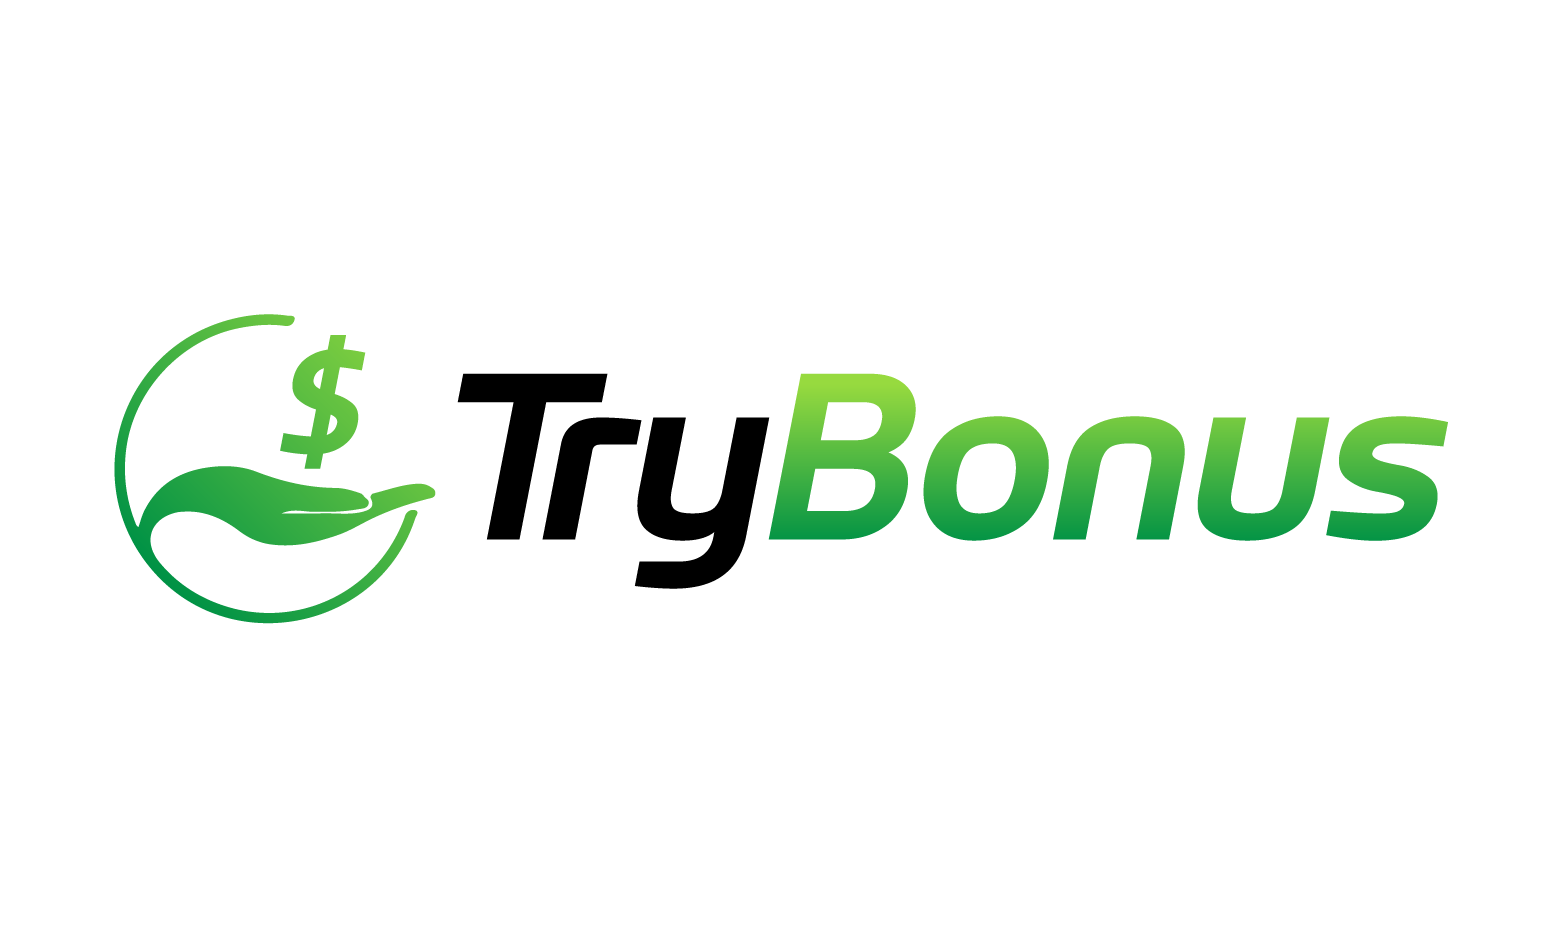 TryBonus.com - Creative brandable domain for sale